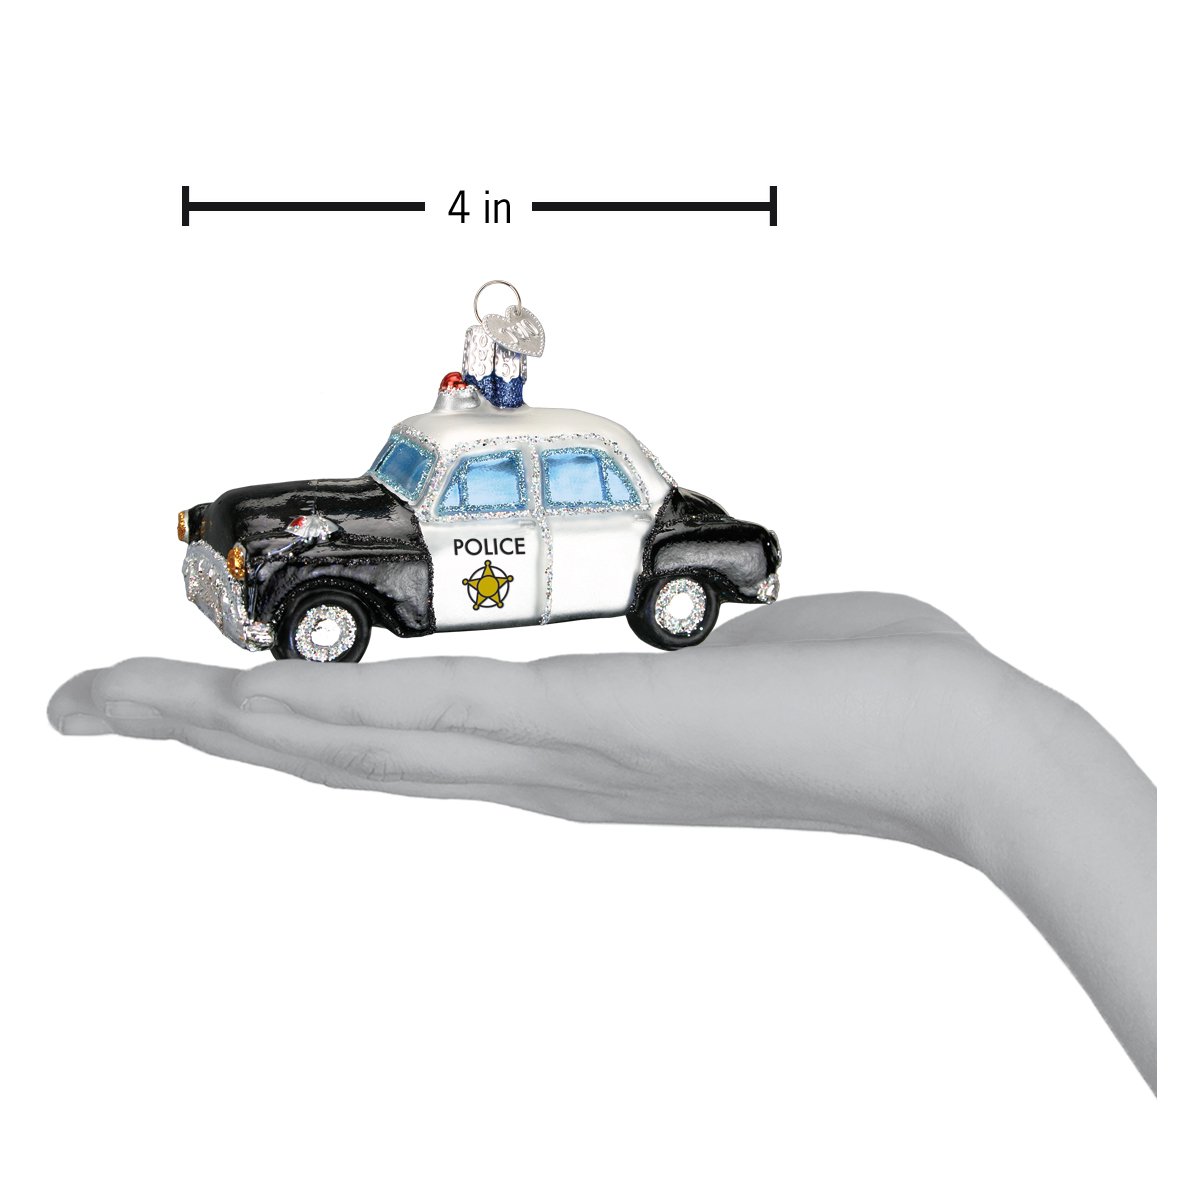 Police Car Ornament